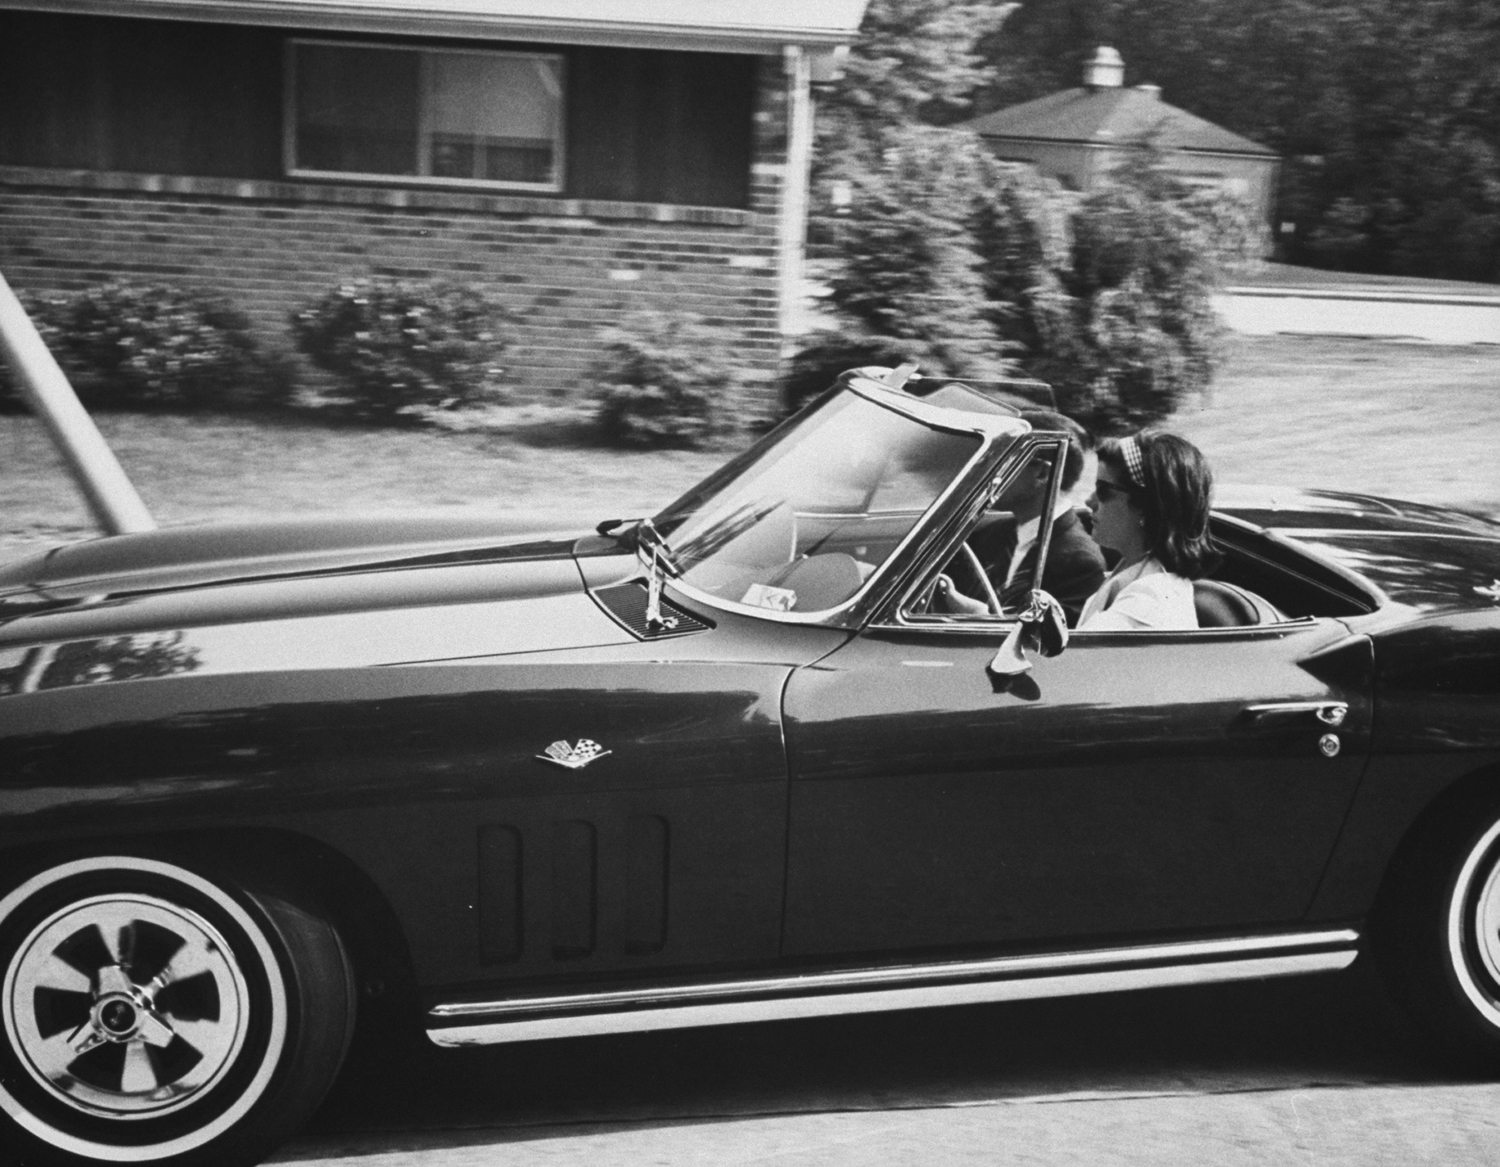 Luci Baines Johnson with Secret Service agent in her Corvette Stingray, 1965.